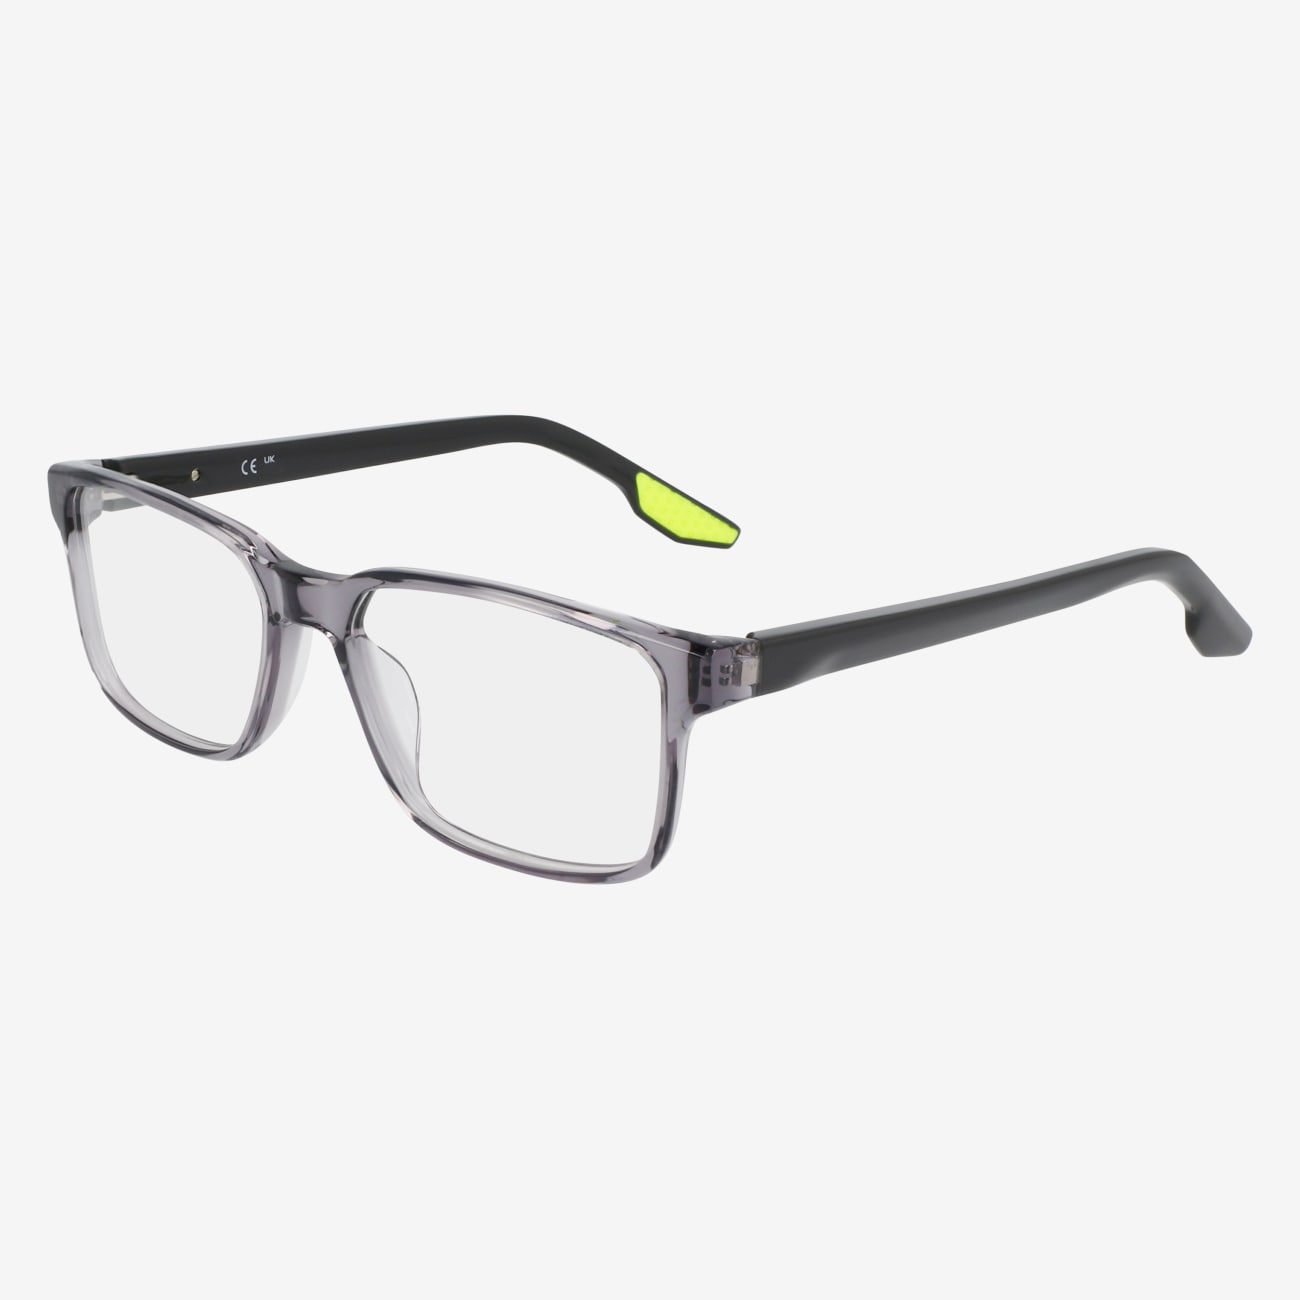 Men's Prescription Eyeglasses | Nike Vision